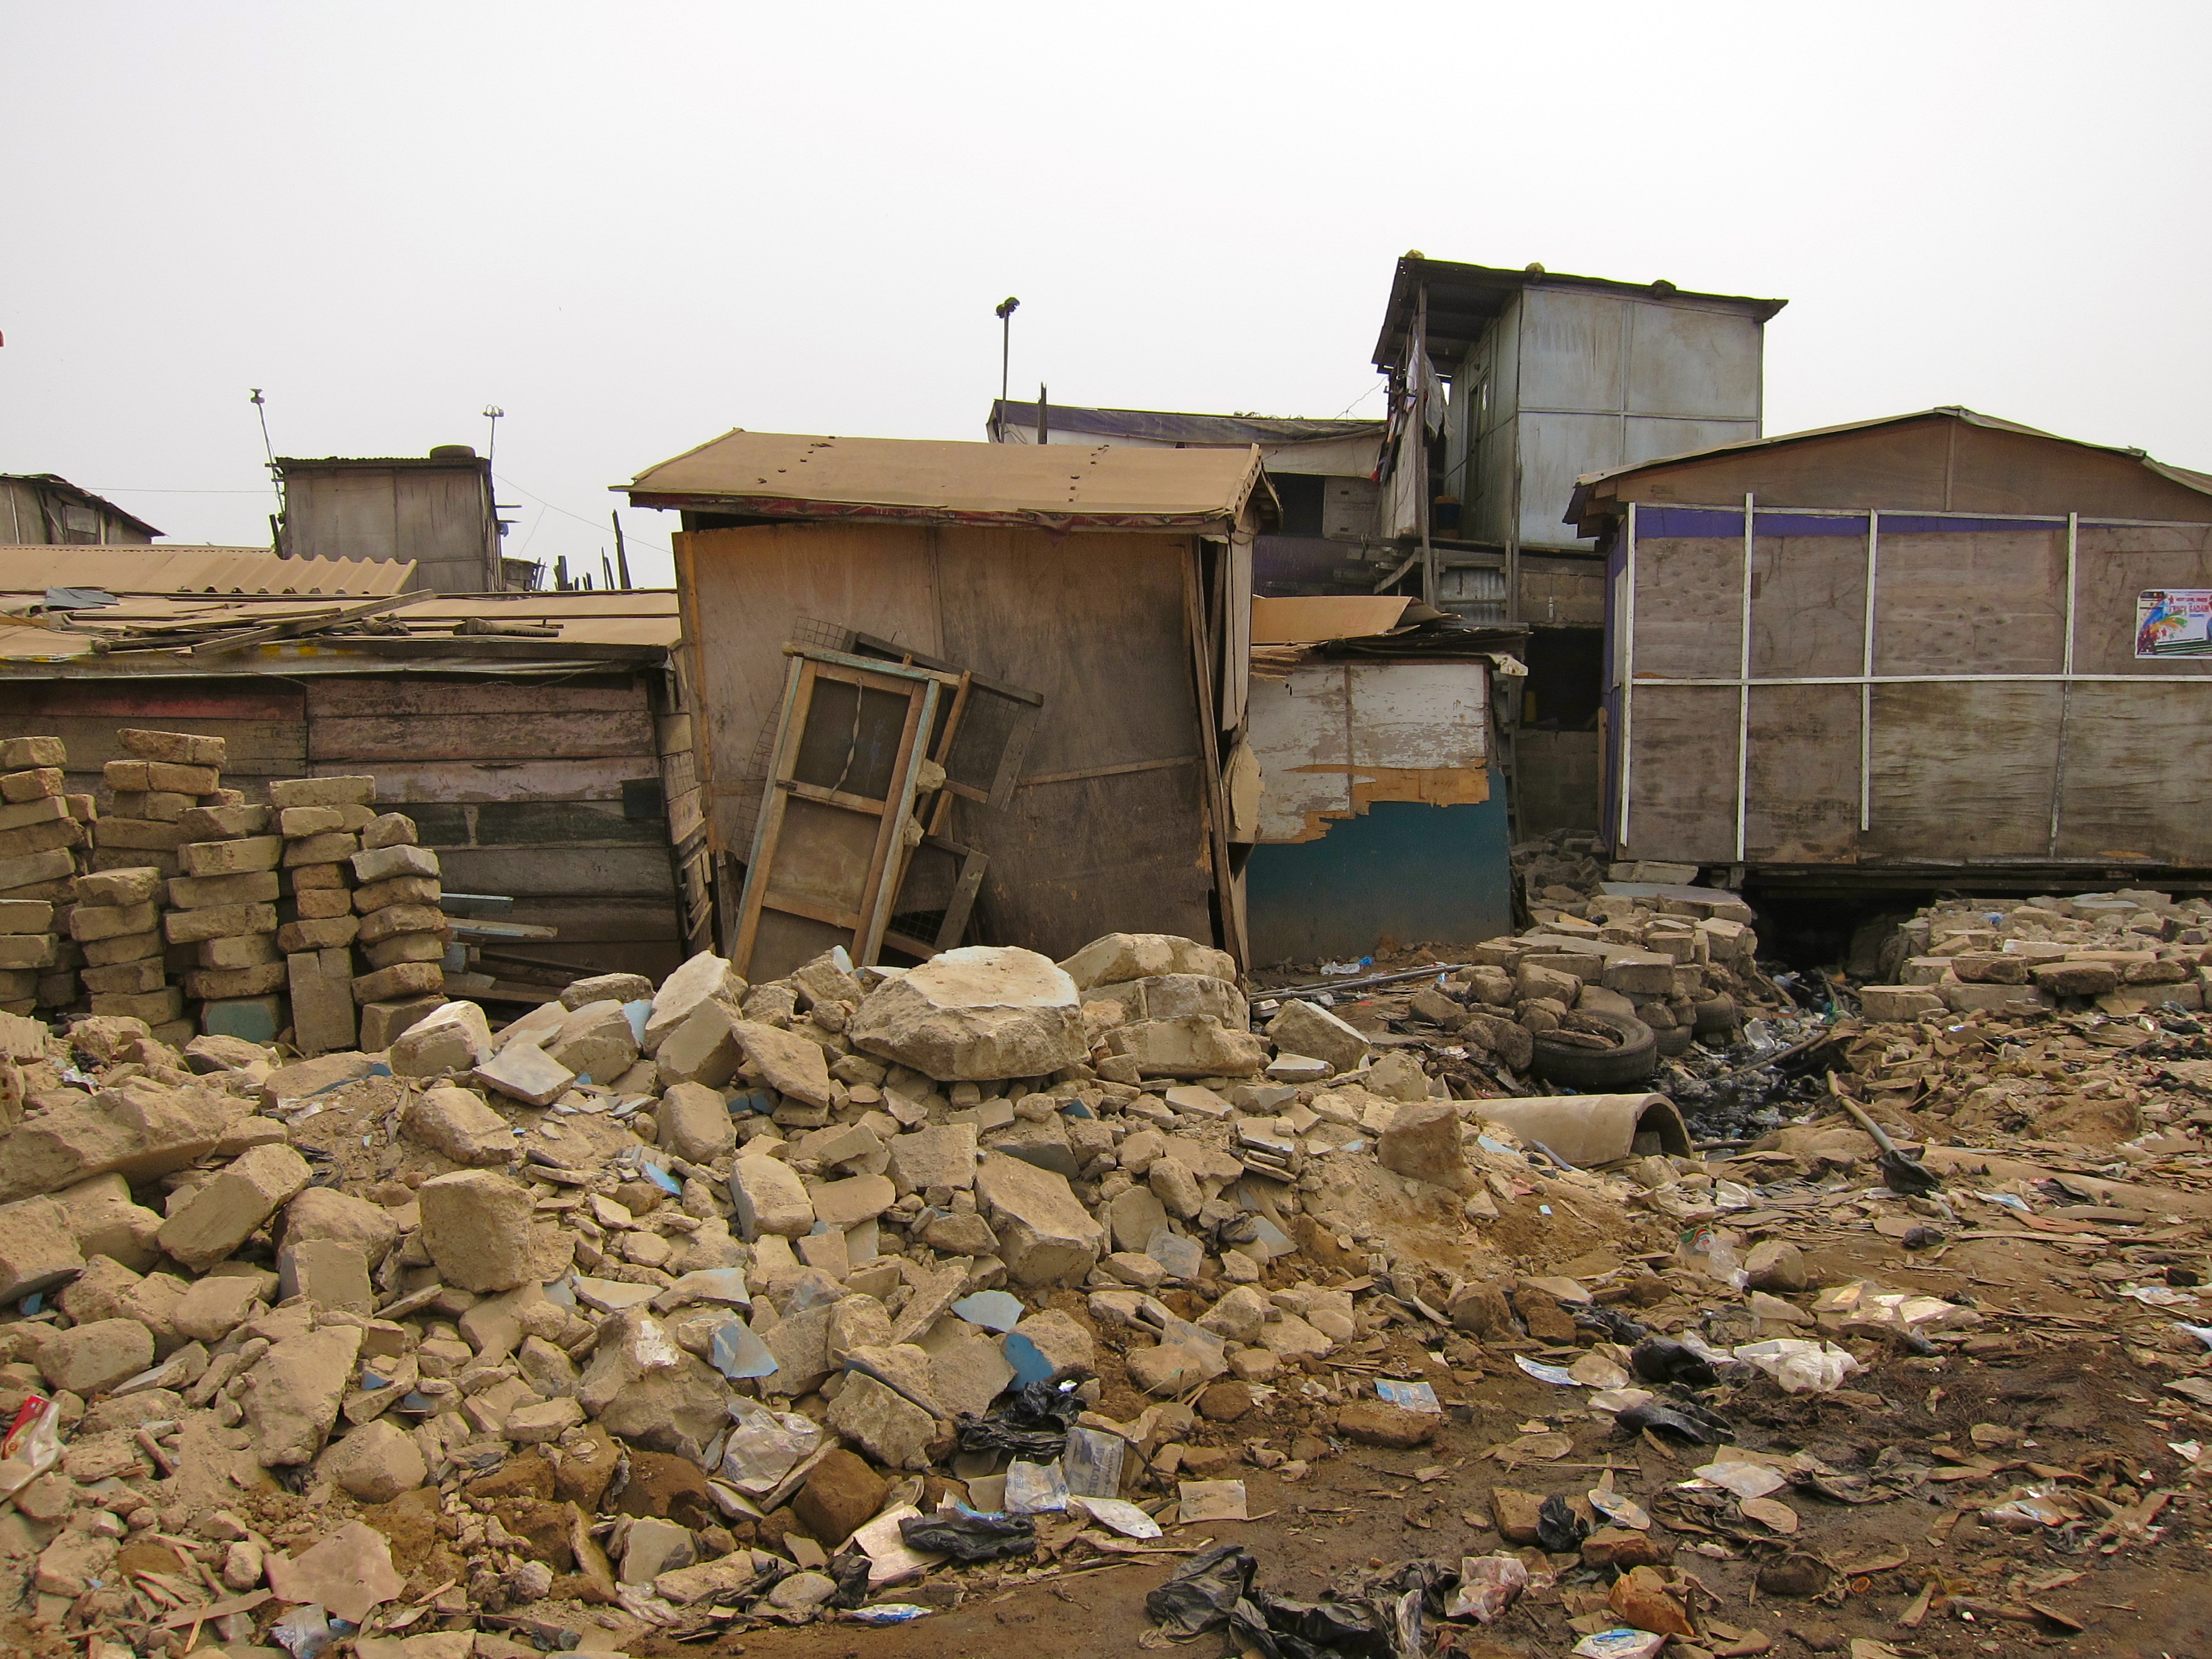 Debris after demolitions in Old Fadama by Slum Dwellers International via flickr, CC BY 2.0